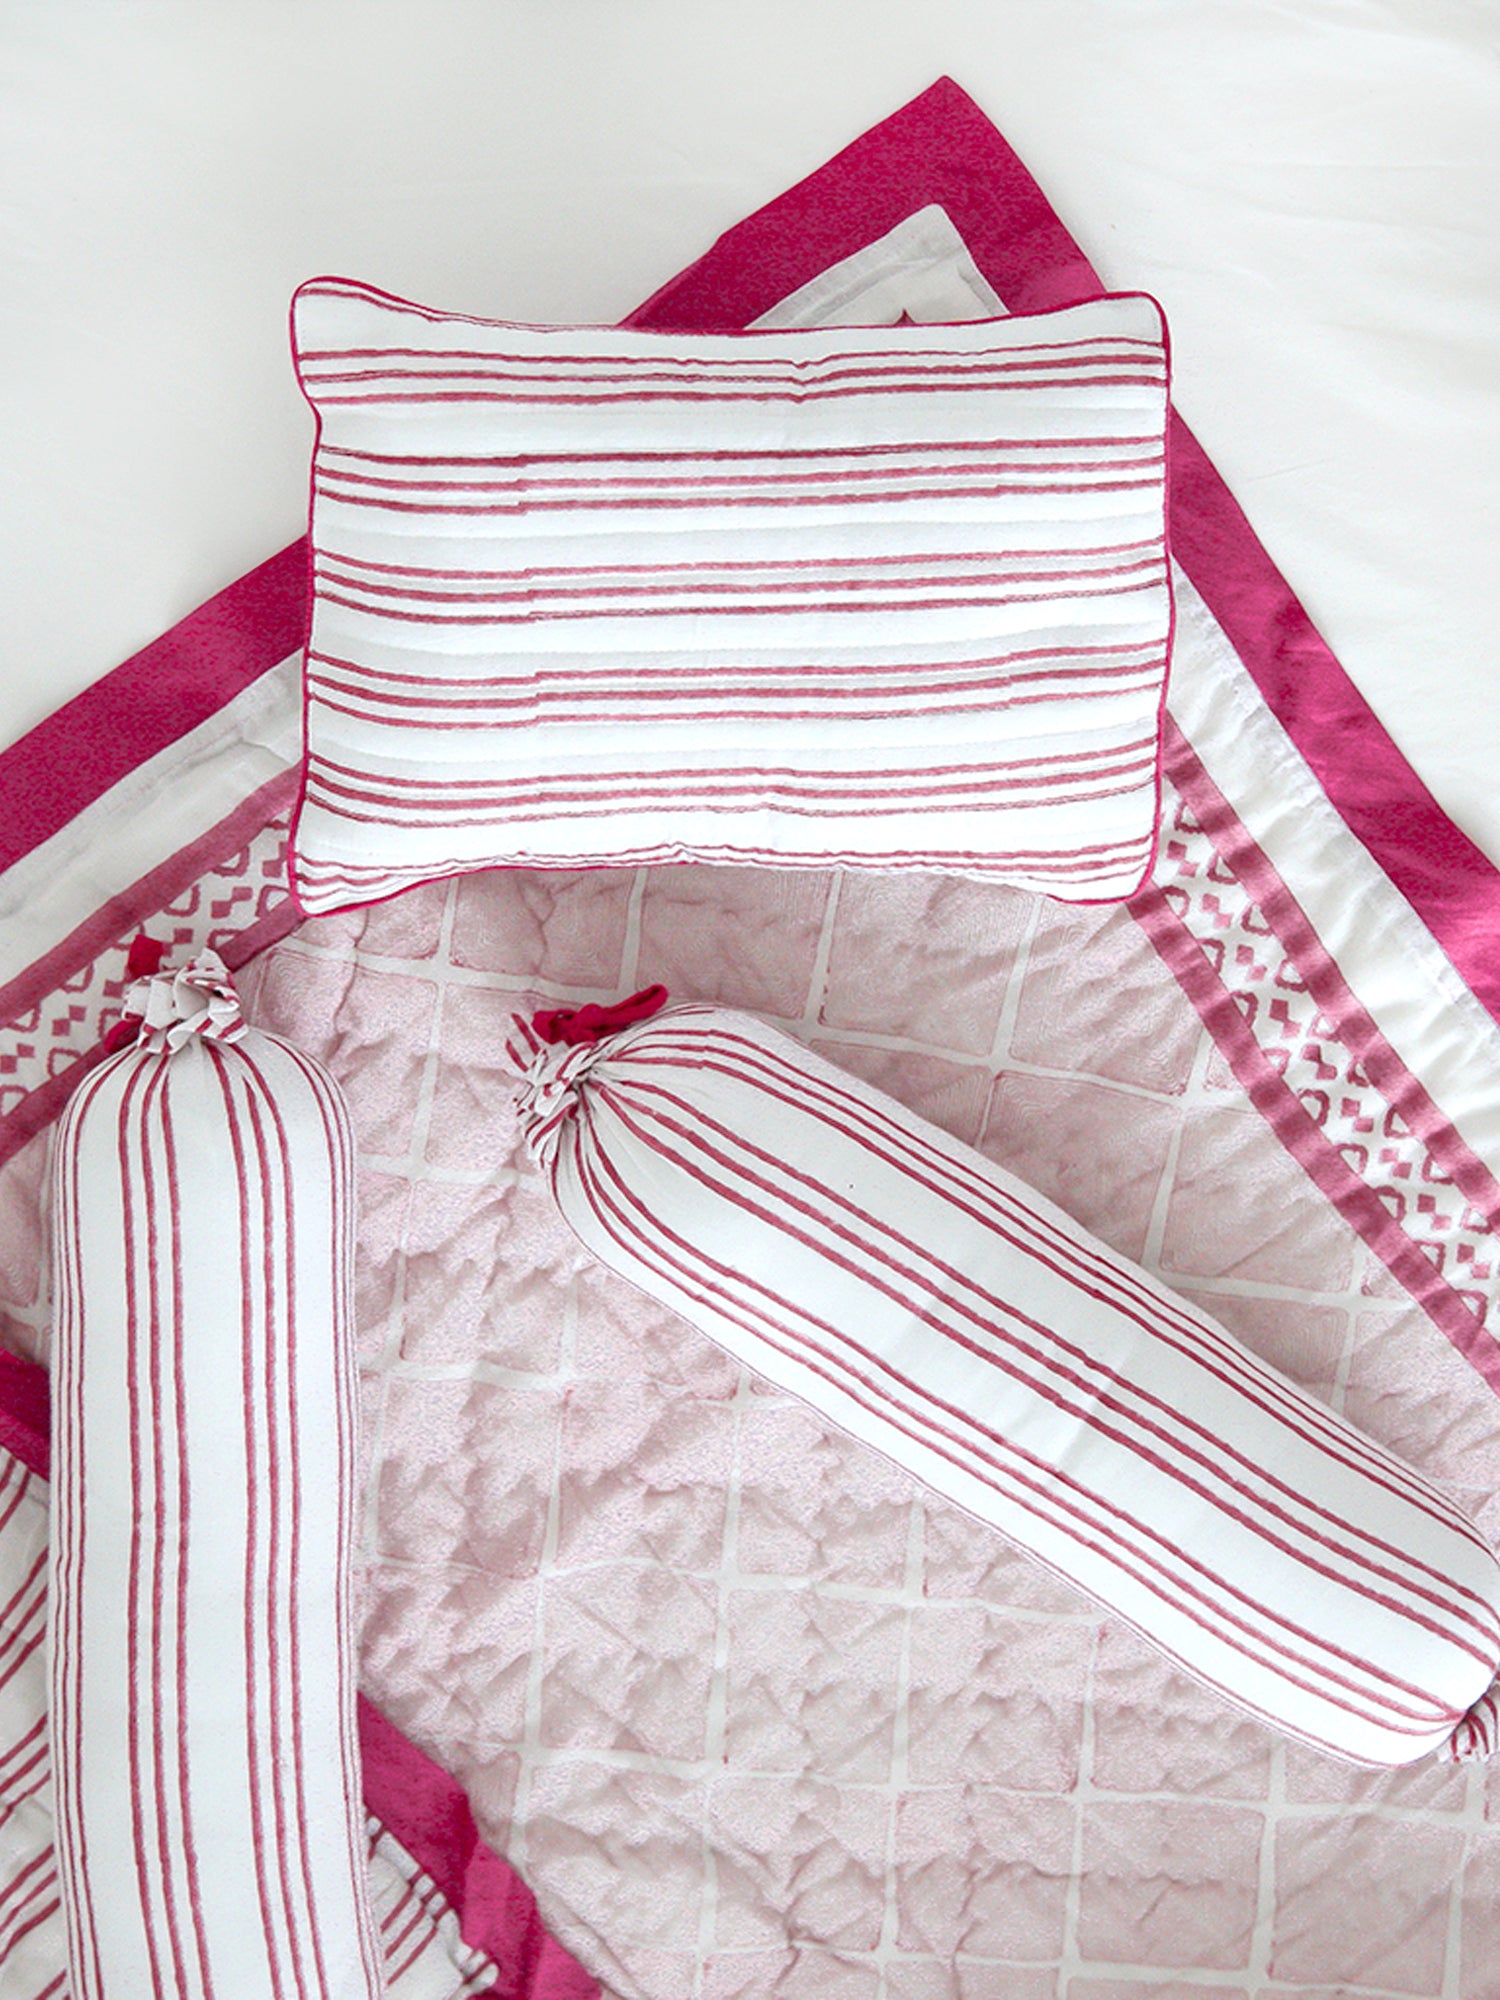 Cairo Pink Cotton Quilt